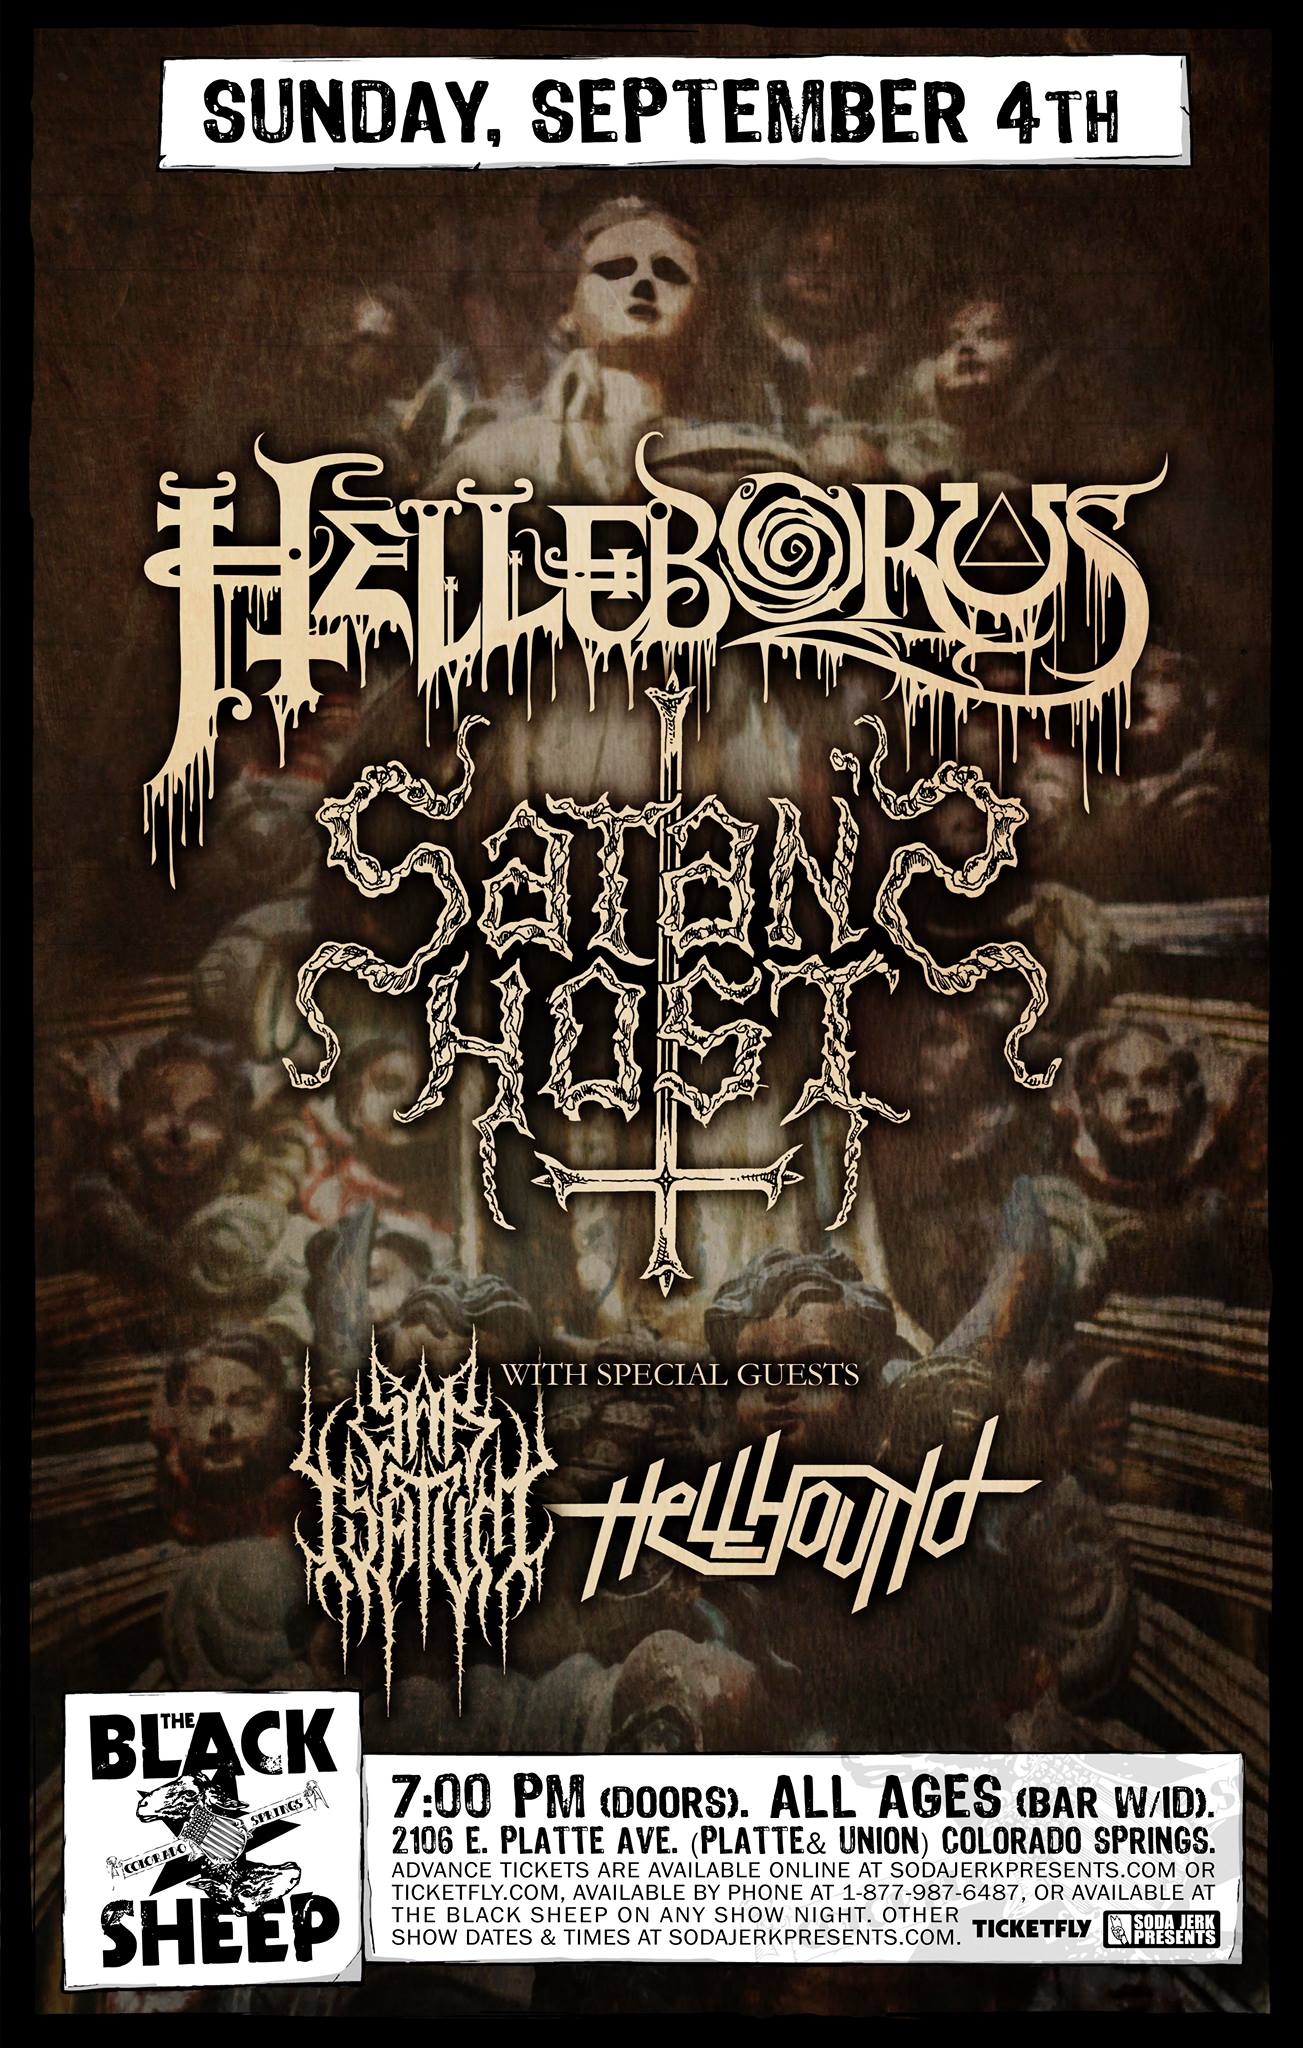 Helleborus Tour Kick off